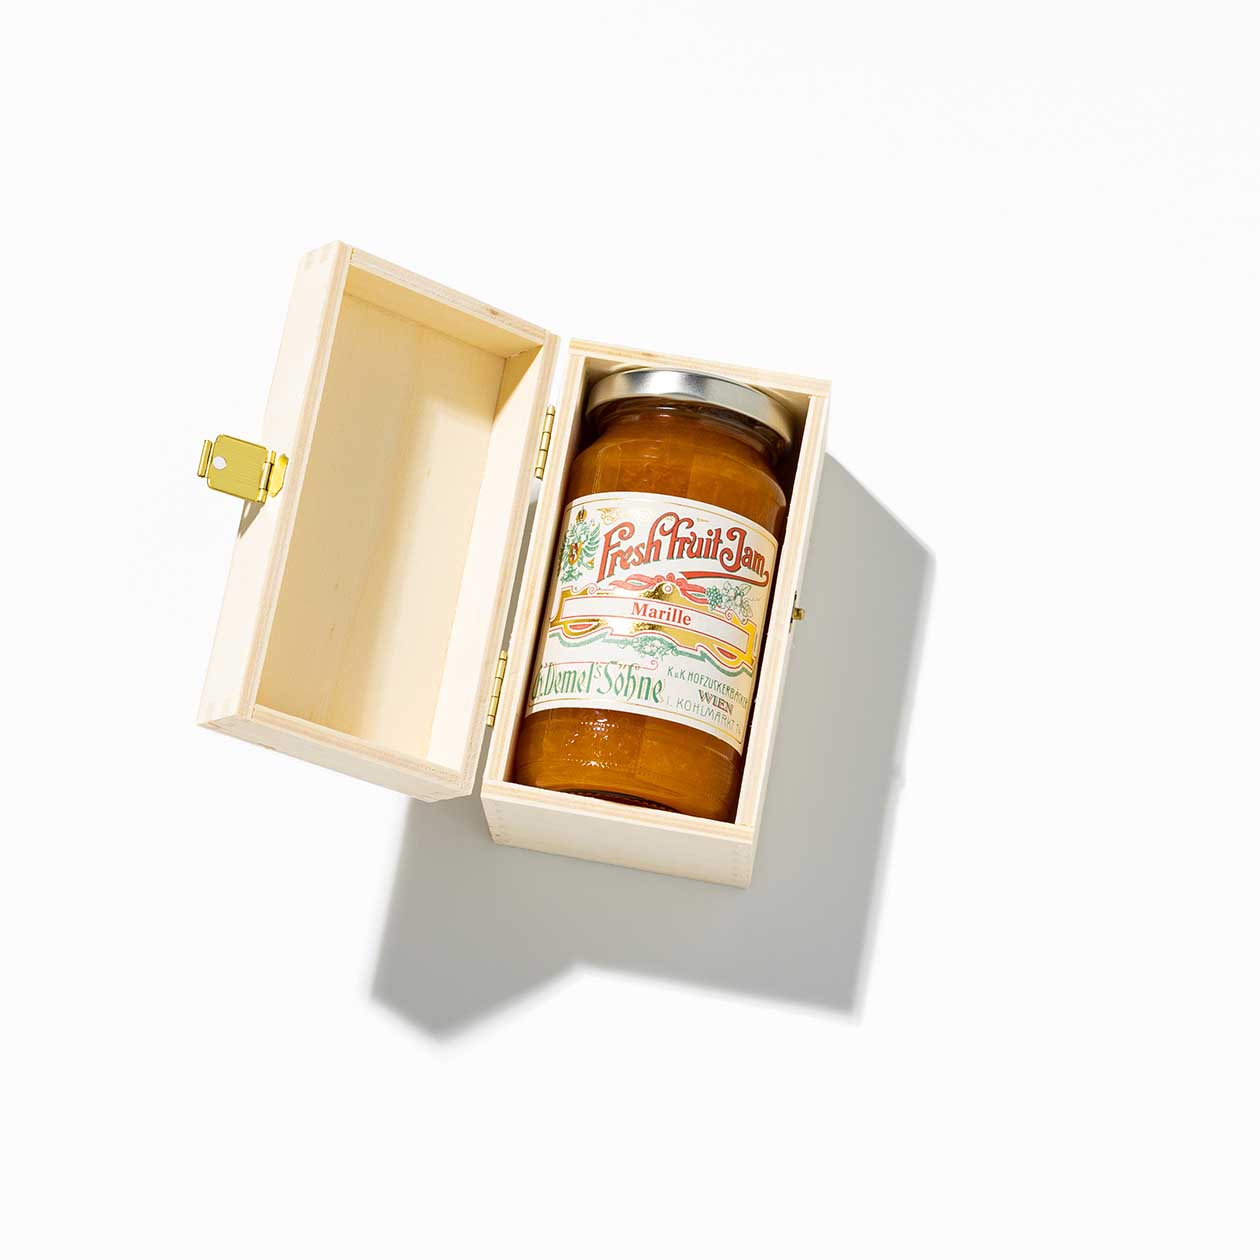 Mermalade in wooden box